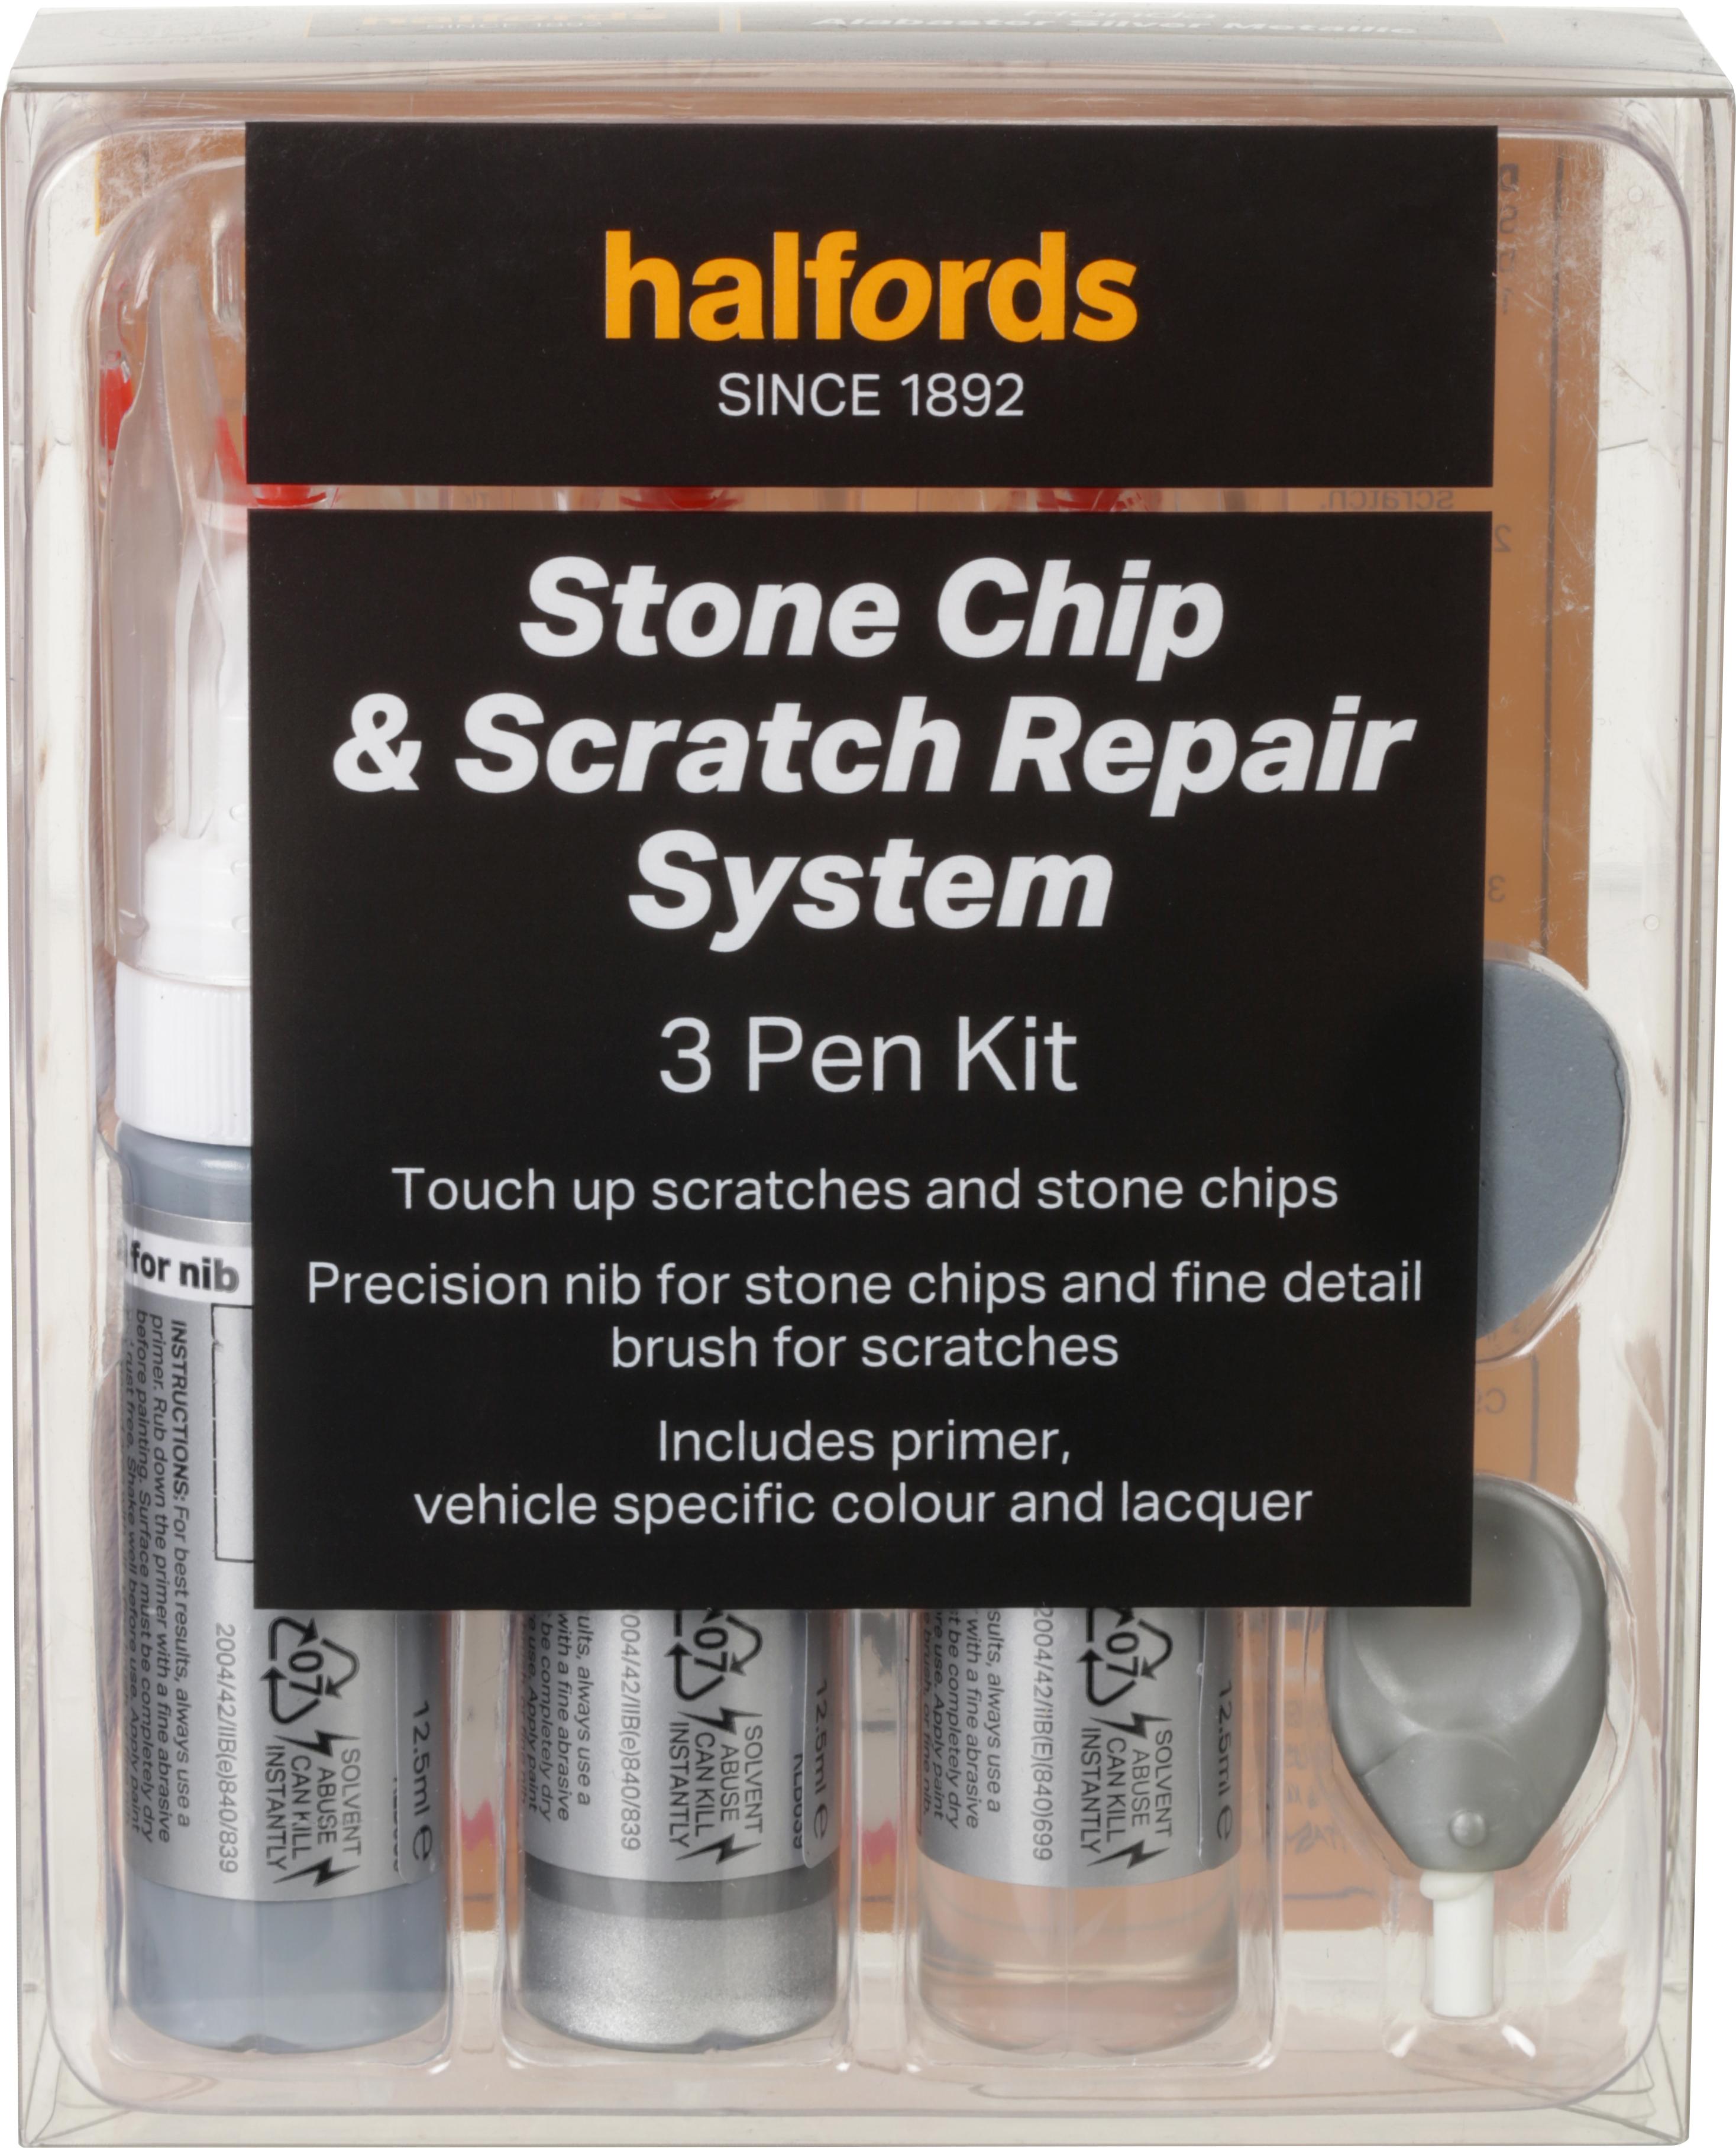 Halfords Honda Alabaster Silver Scratch & Chip Repair Kit